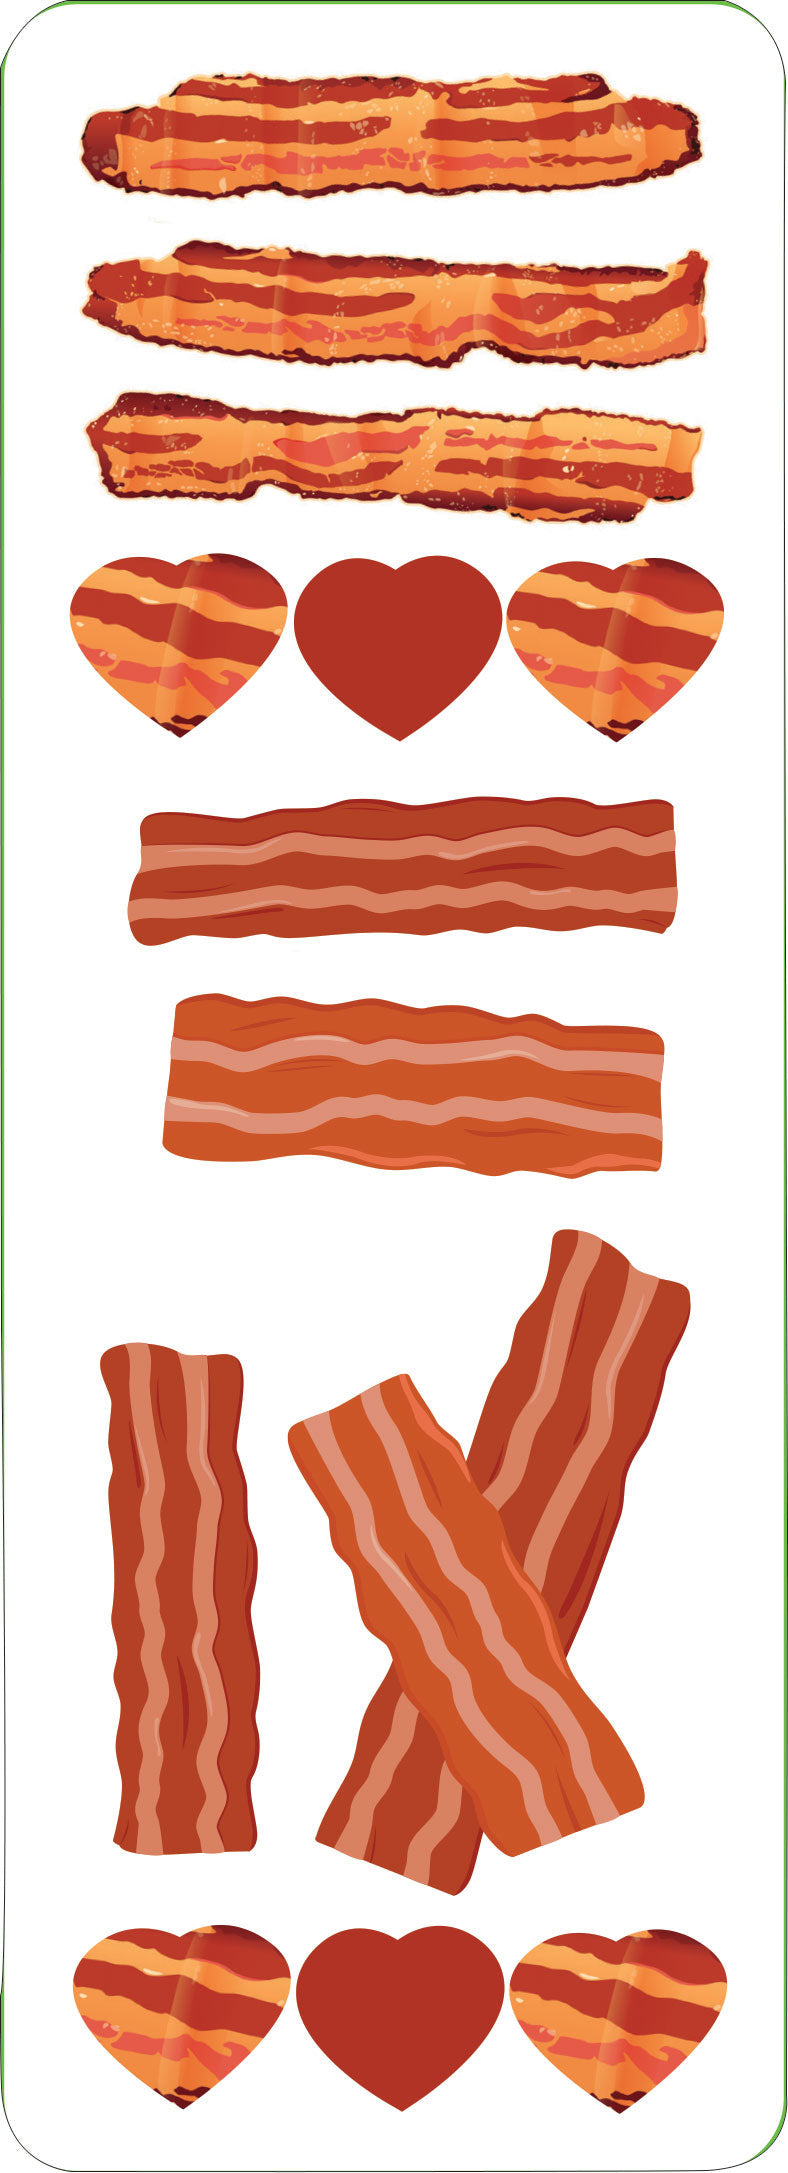 Bacon Sticker Set